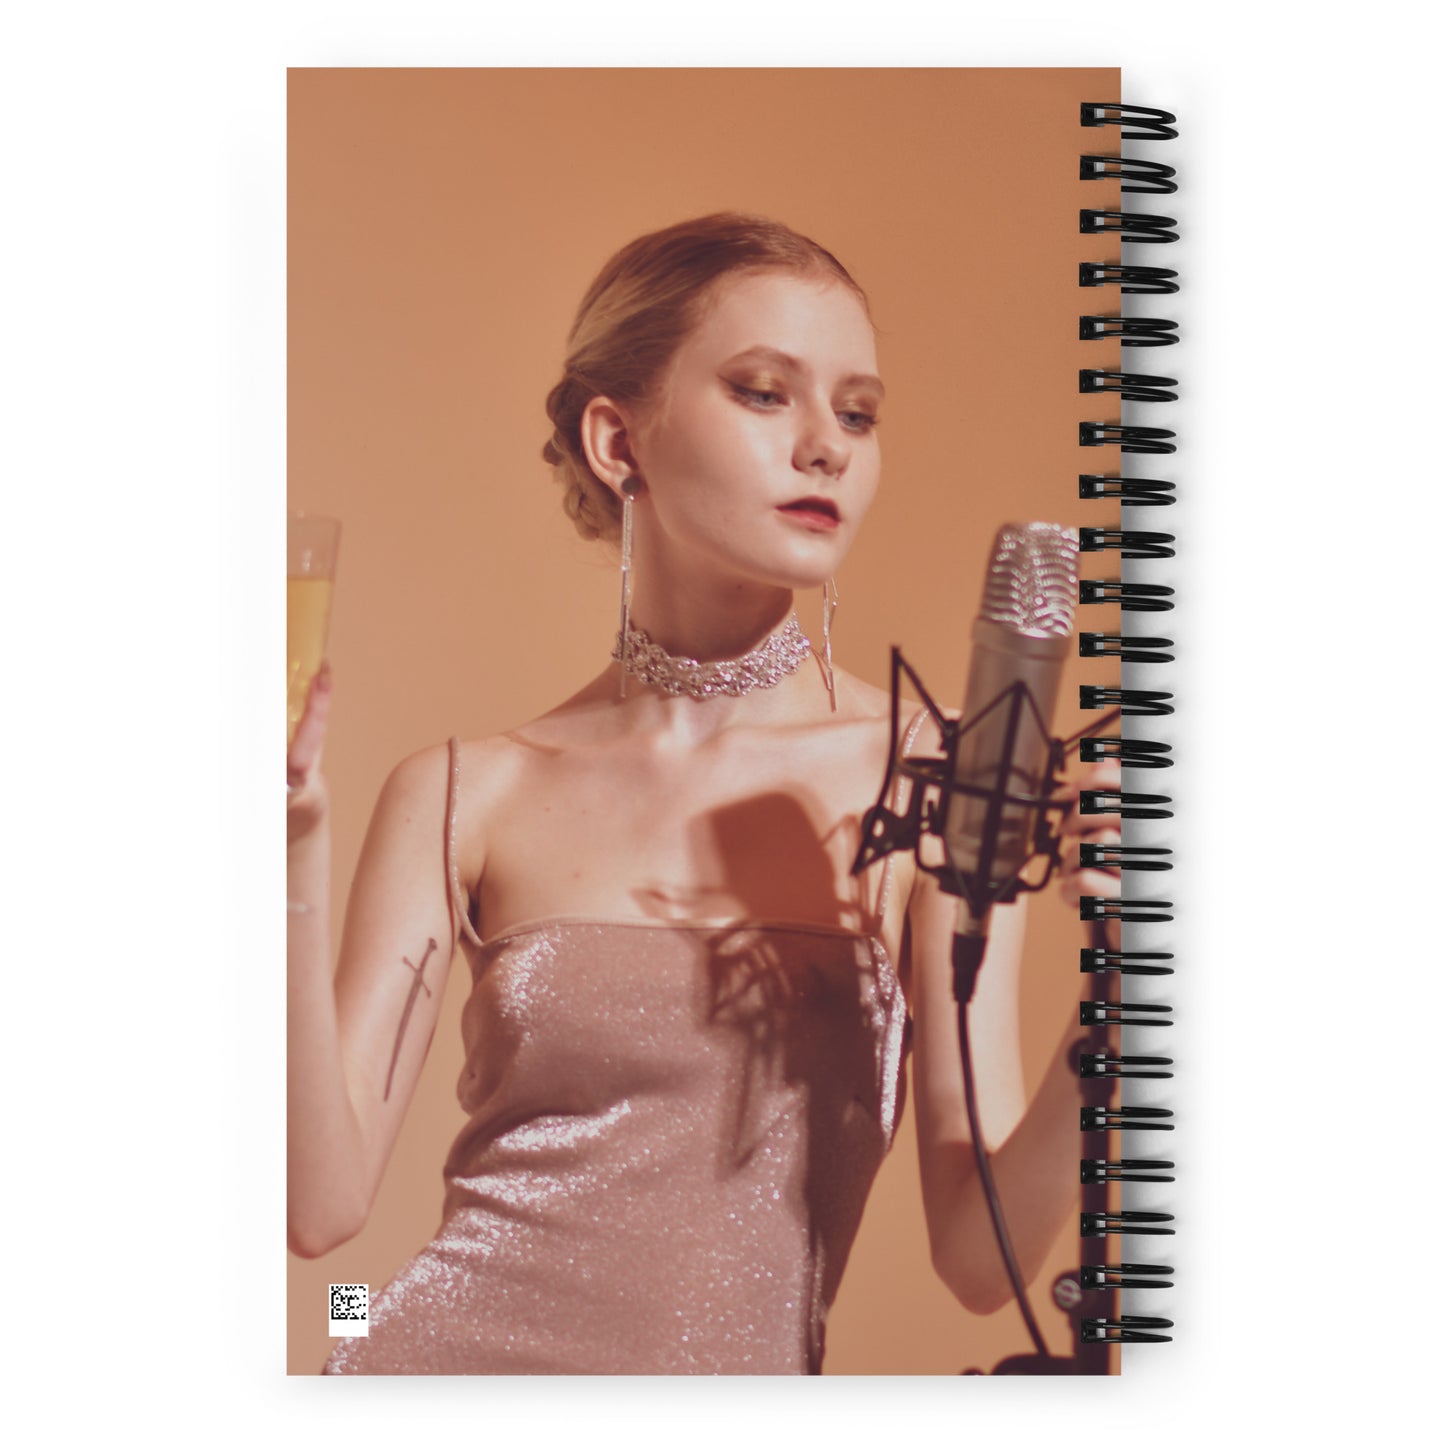 Spiral notebook "Champagne & Cigarettes"